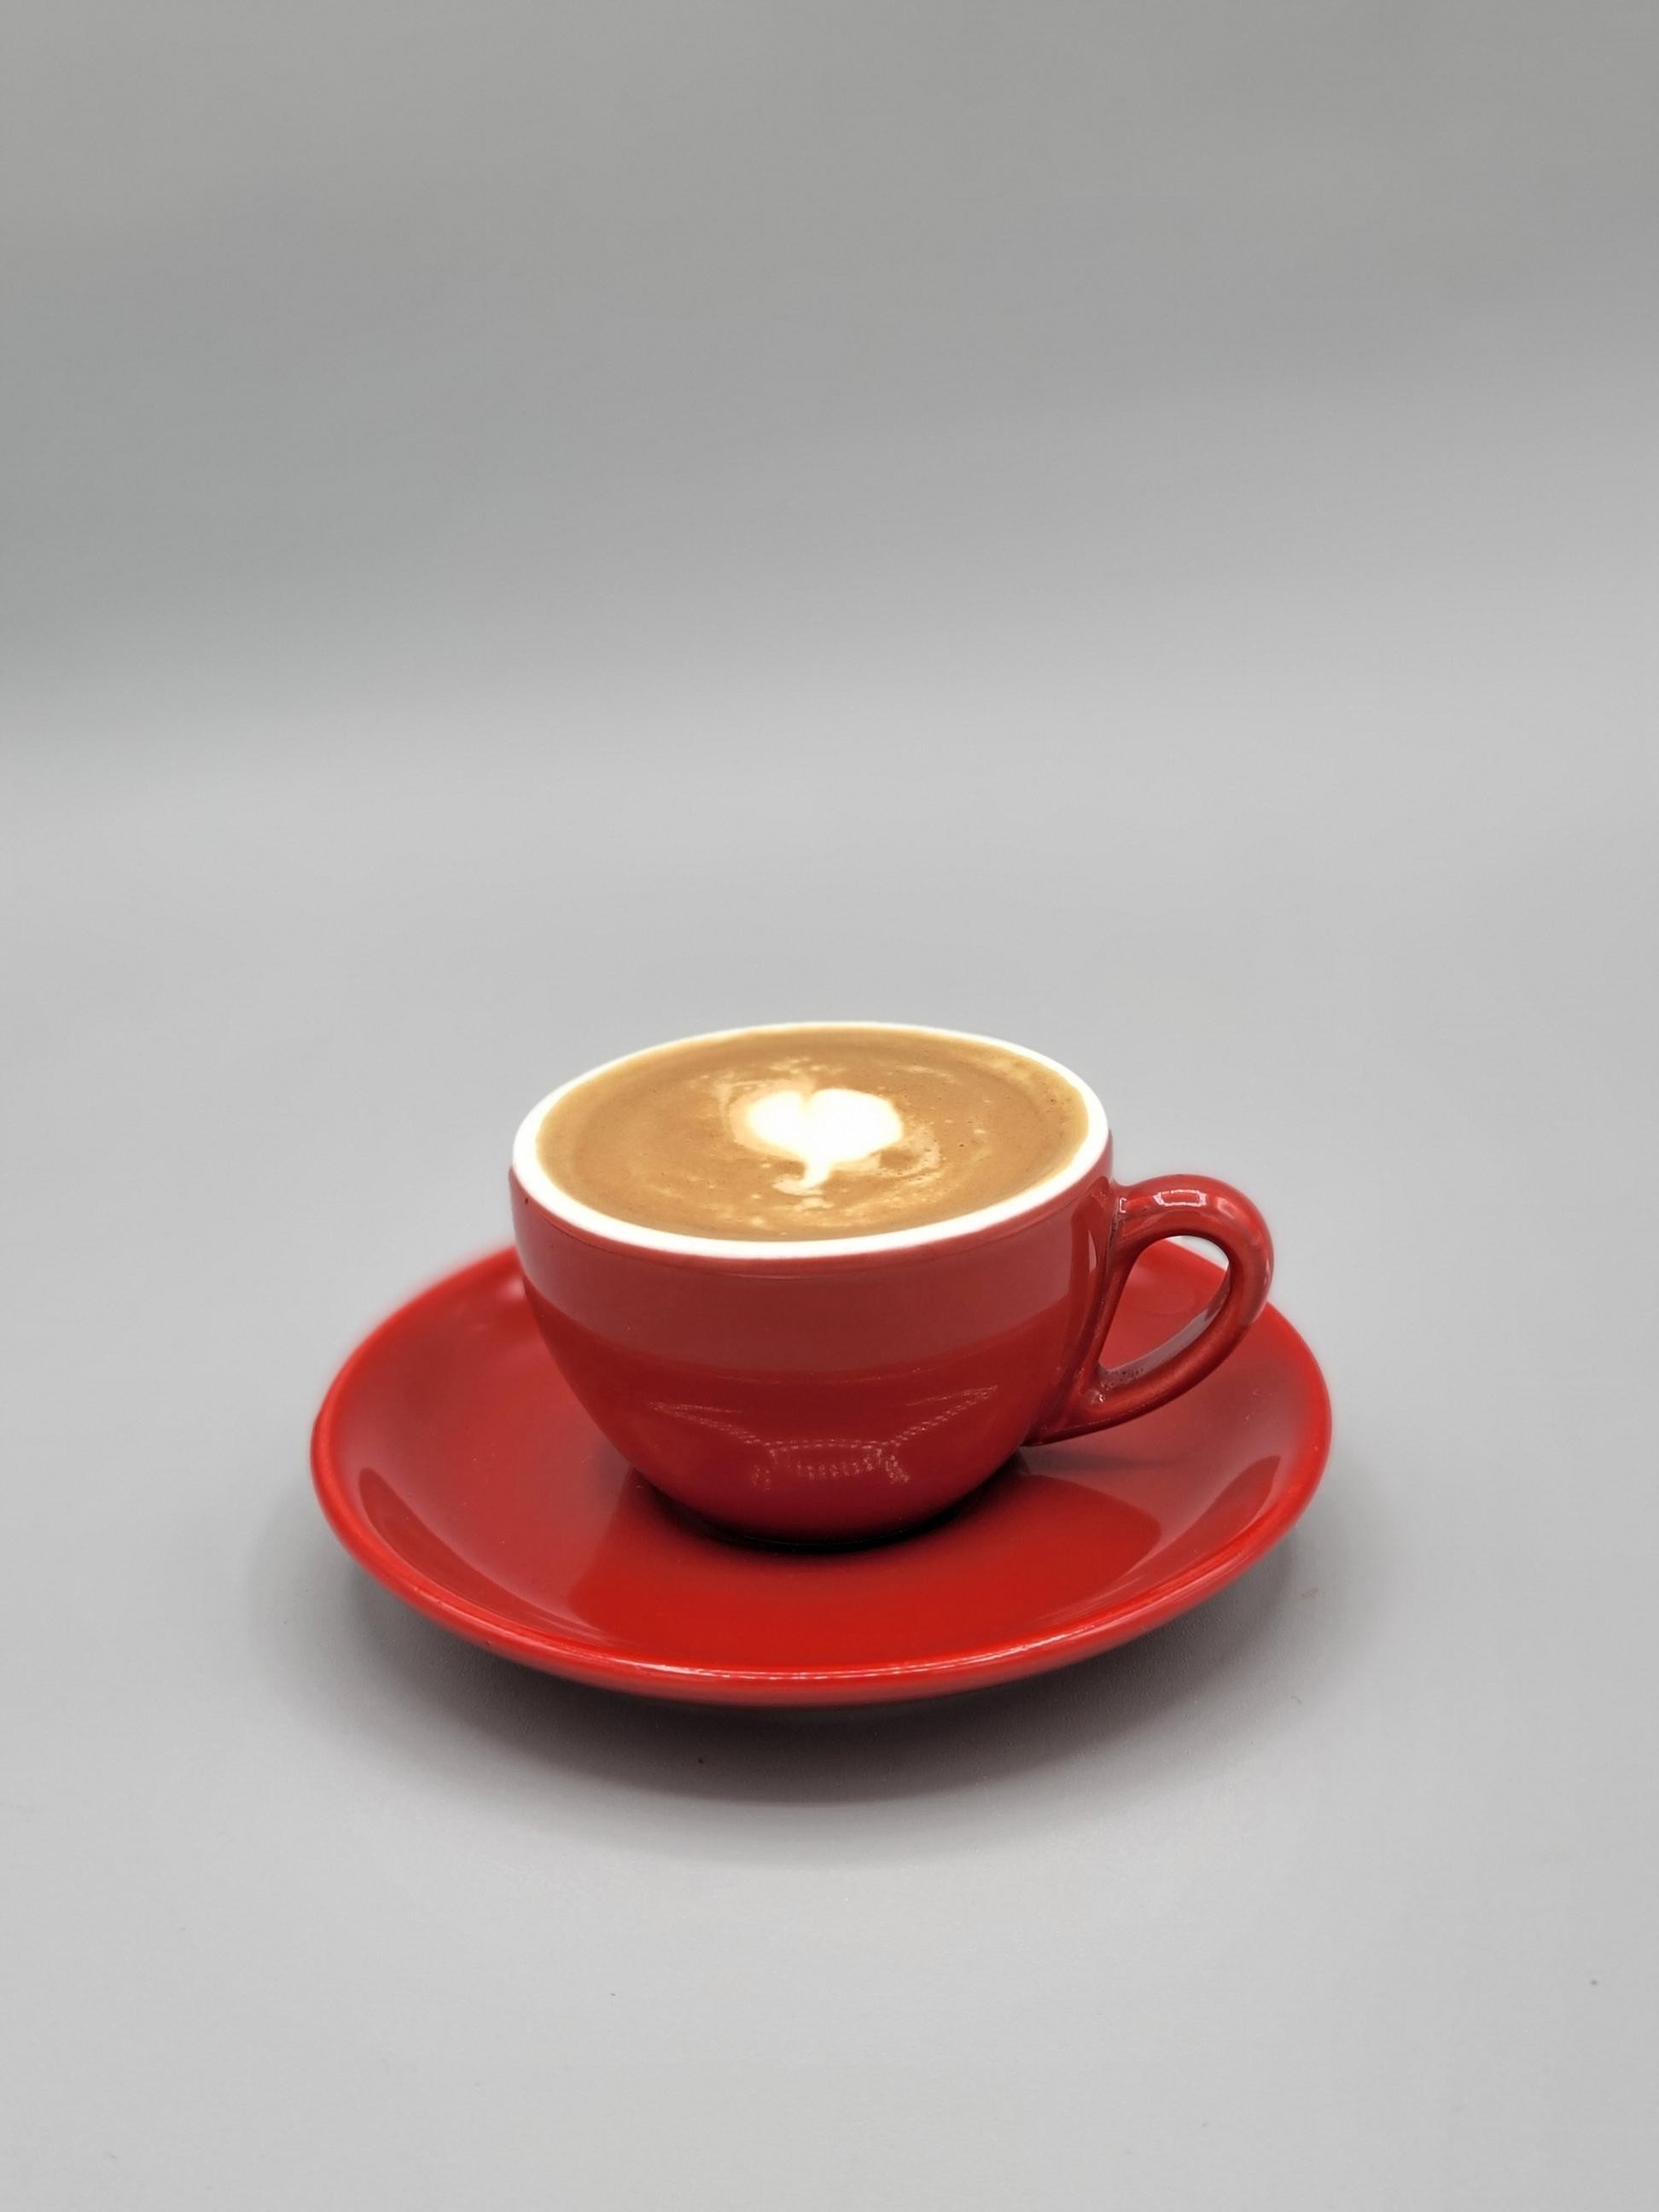 Volarium Irish glass coffee Mugs, Latte cups, Set of 2 cappuccino